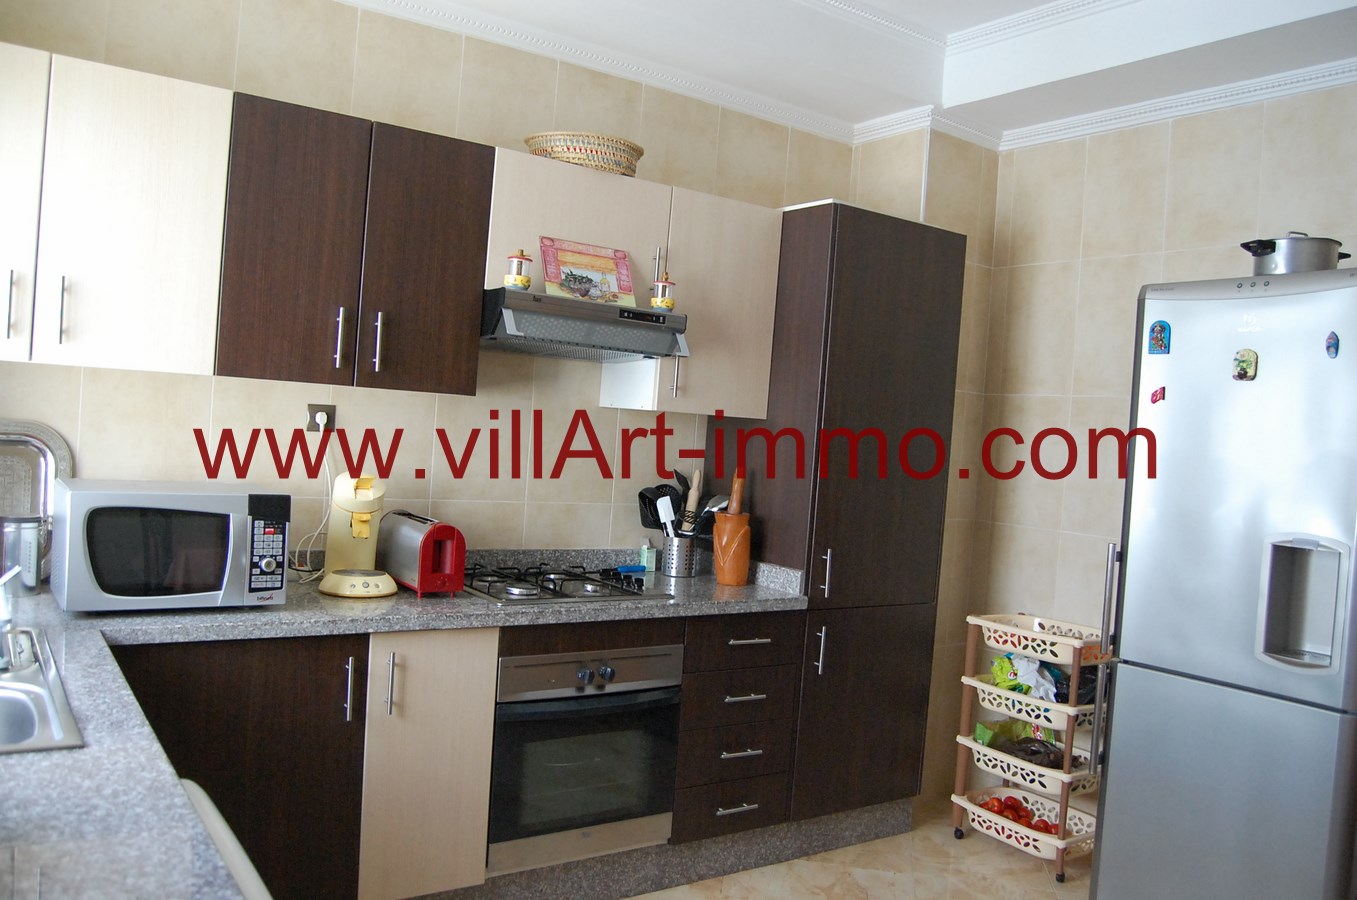 6-location-villa-meuble-tanger-achakar-cuisine-lv872-villart-immo